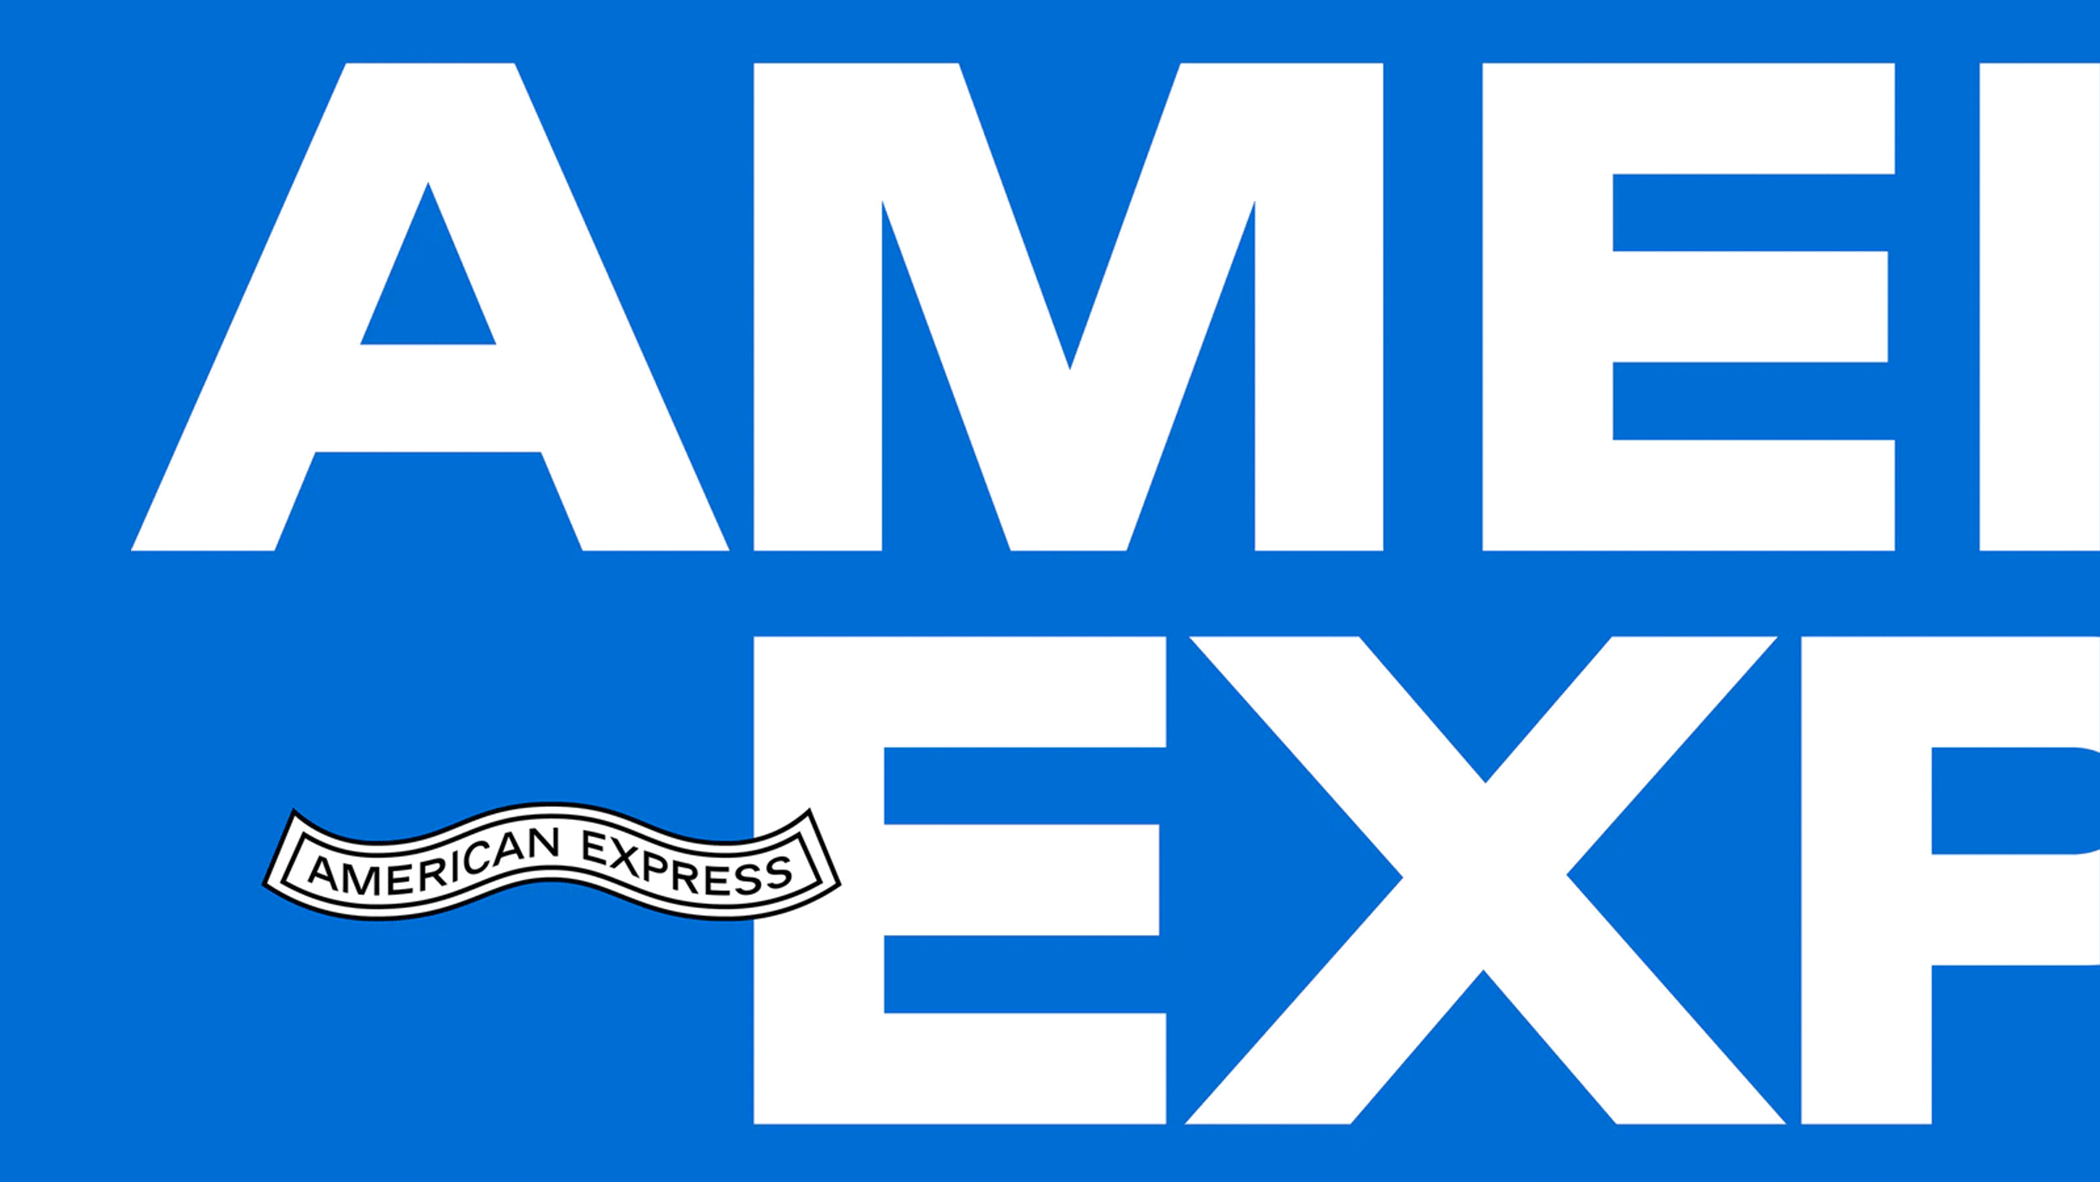 American Express Rebrand image by Pentagram